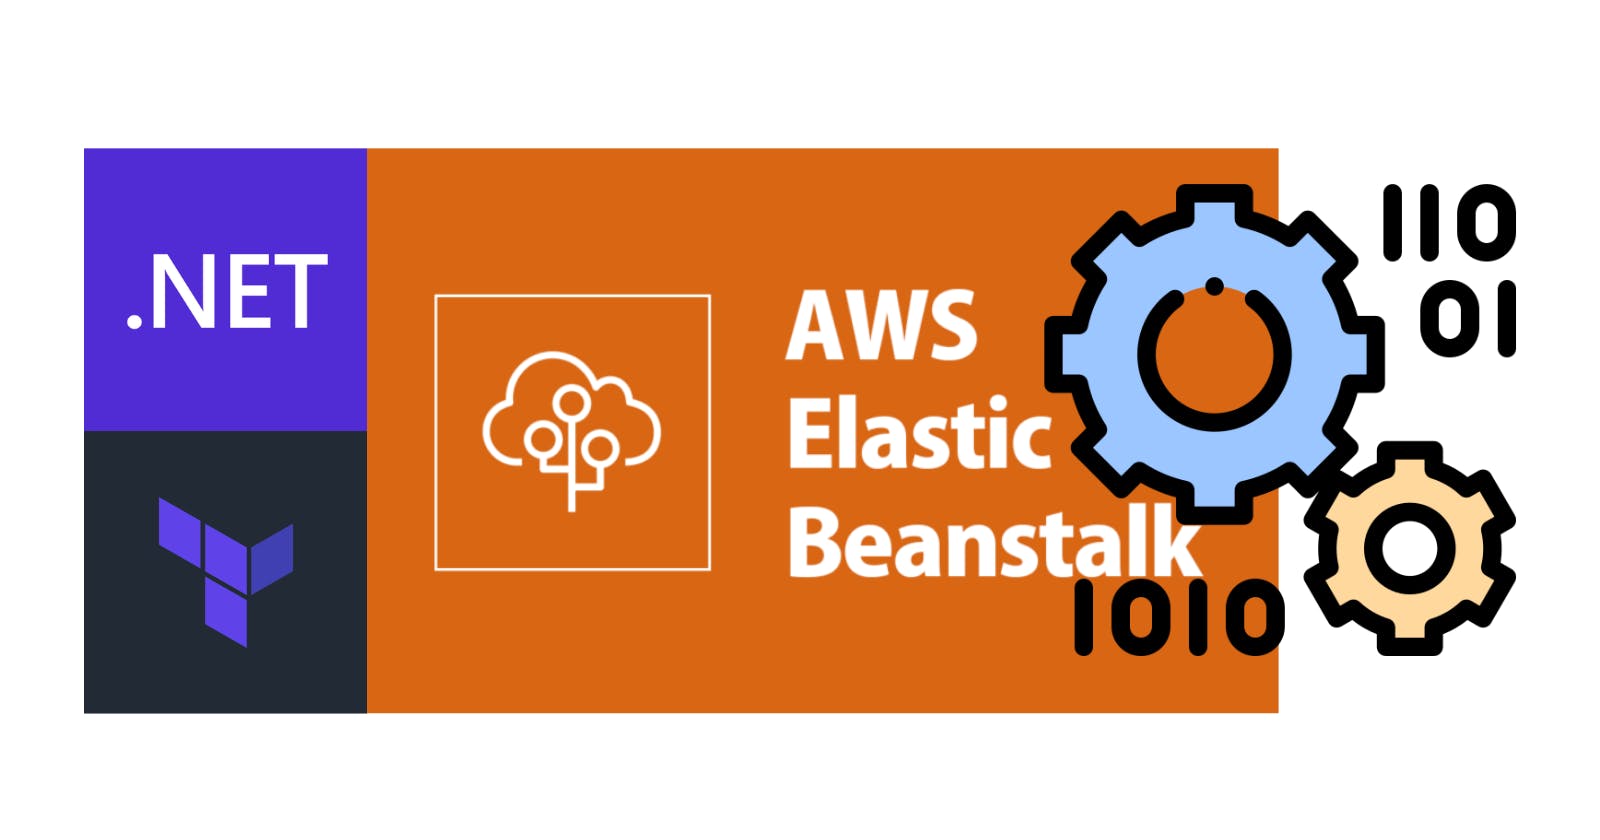 How to Deploy a Windows Service on AWS Elastic Beanstalk using Terraform